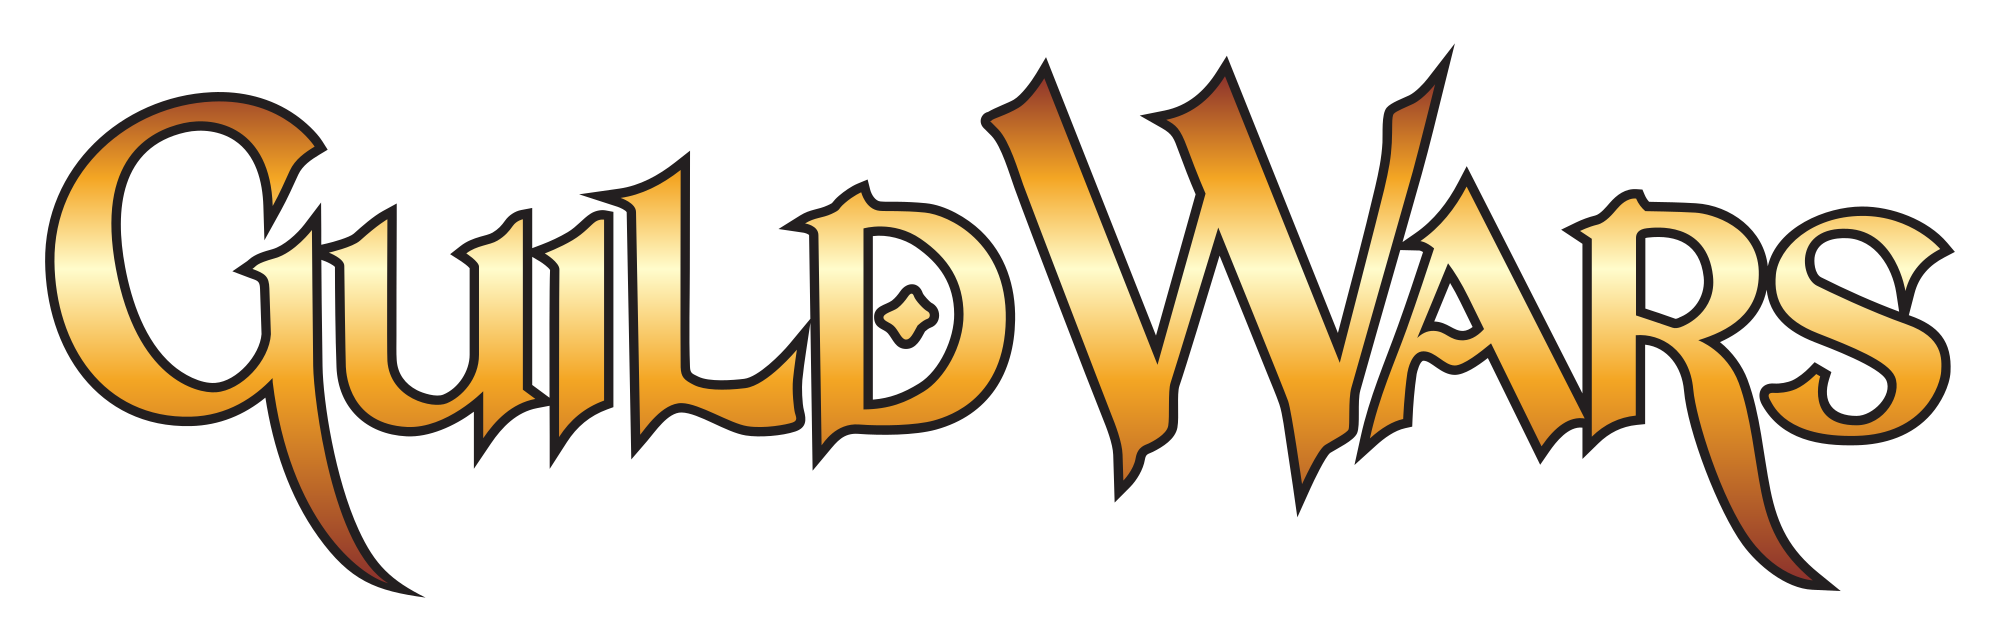 Guild Wars svg #15, Download drawings